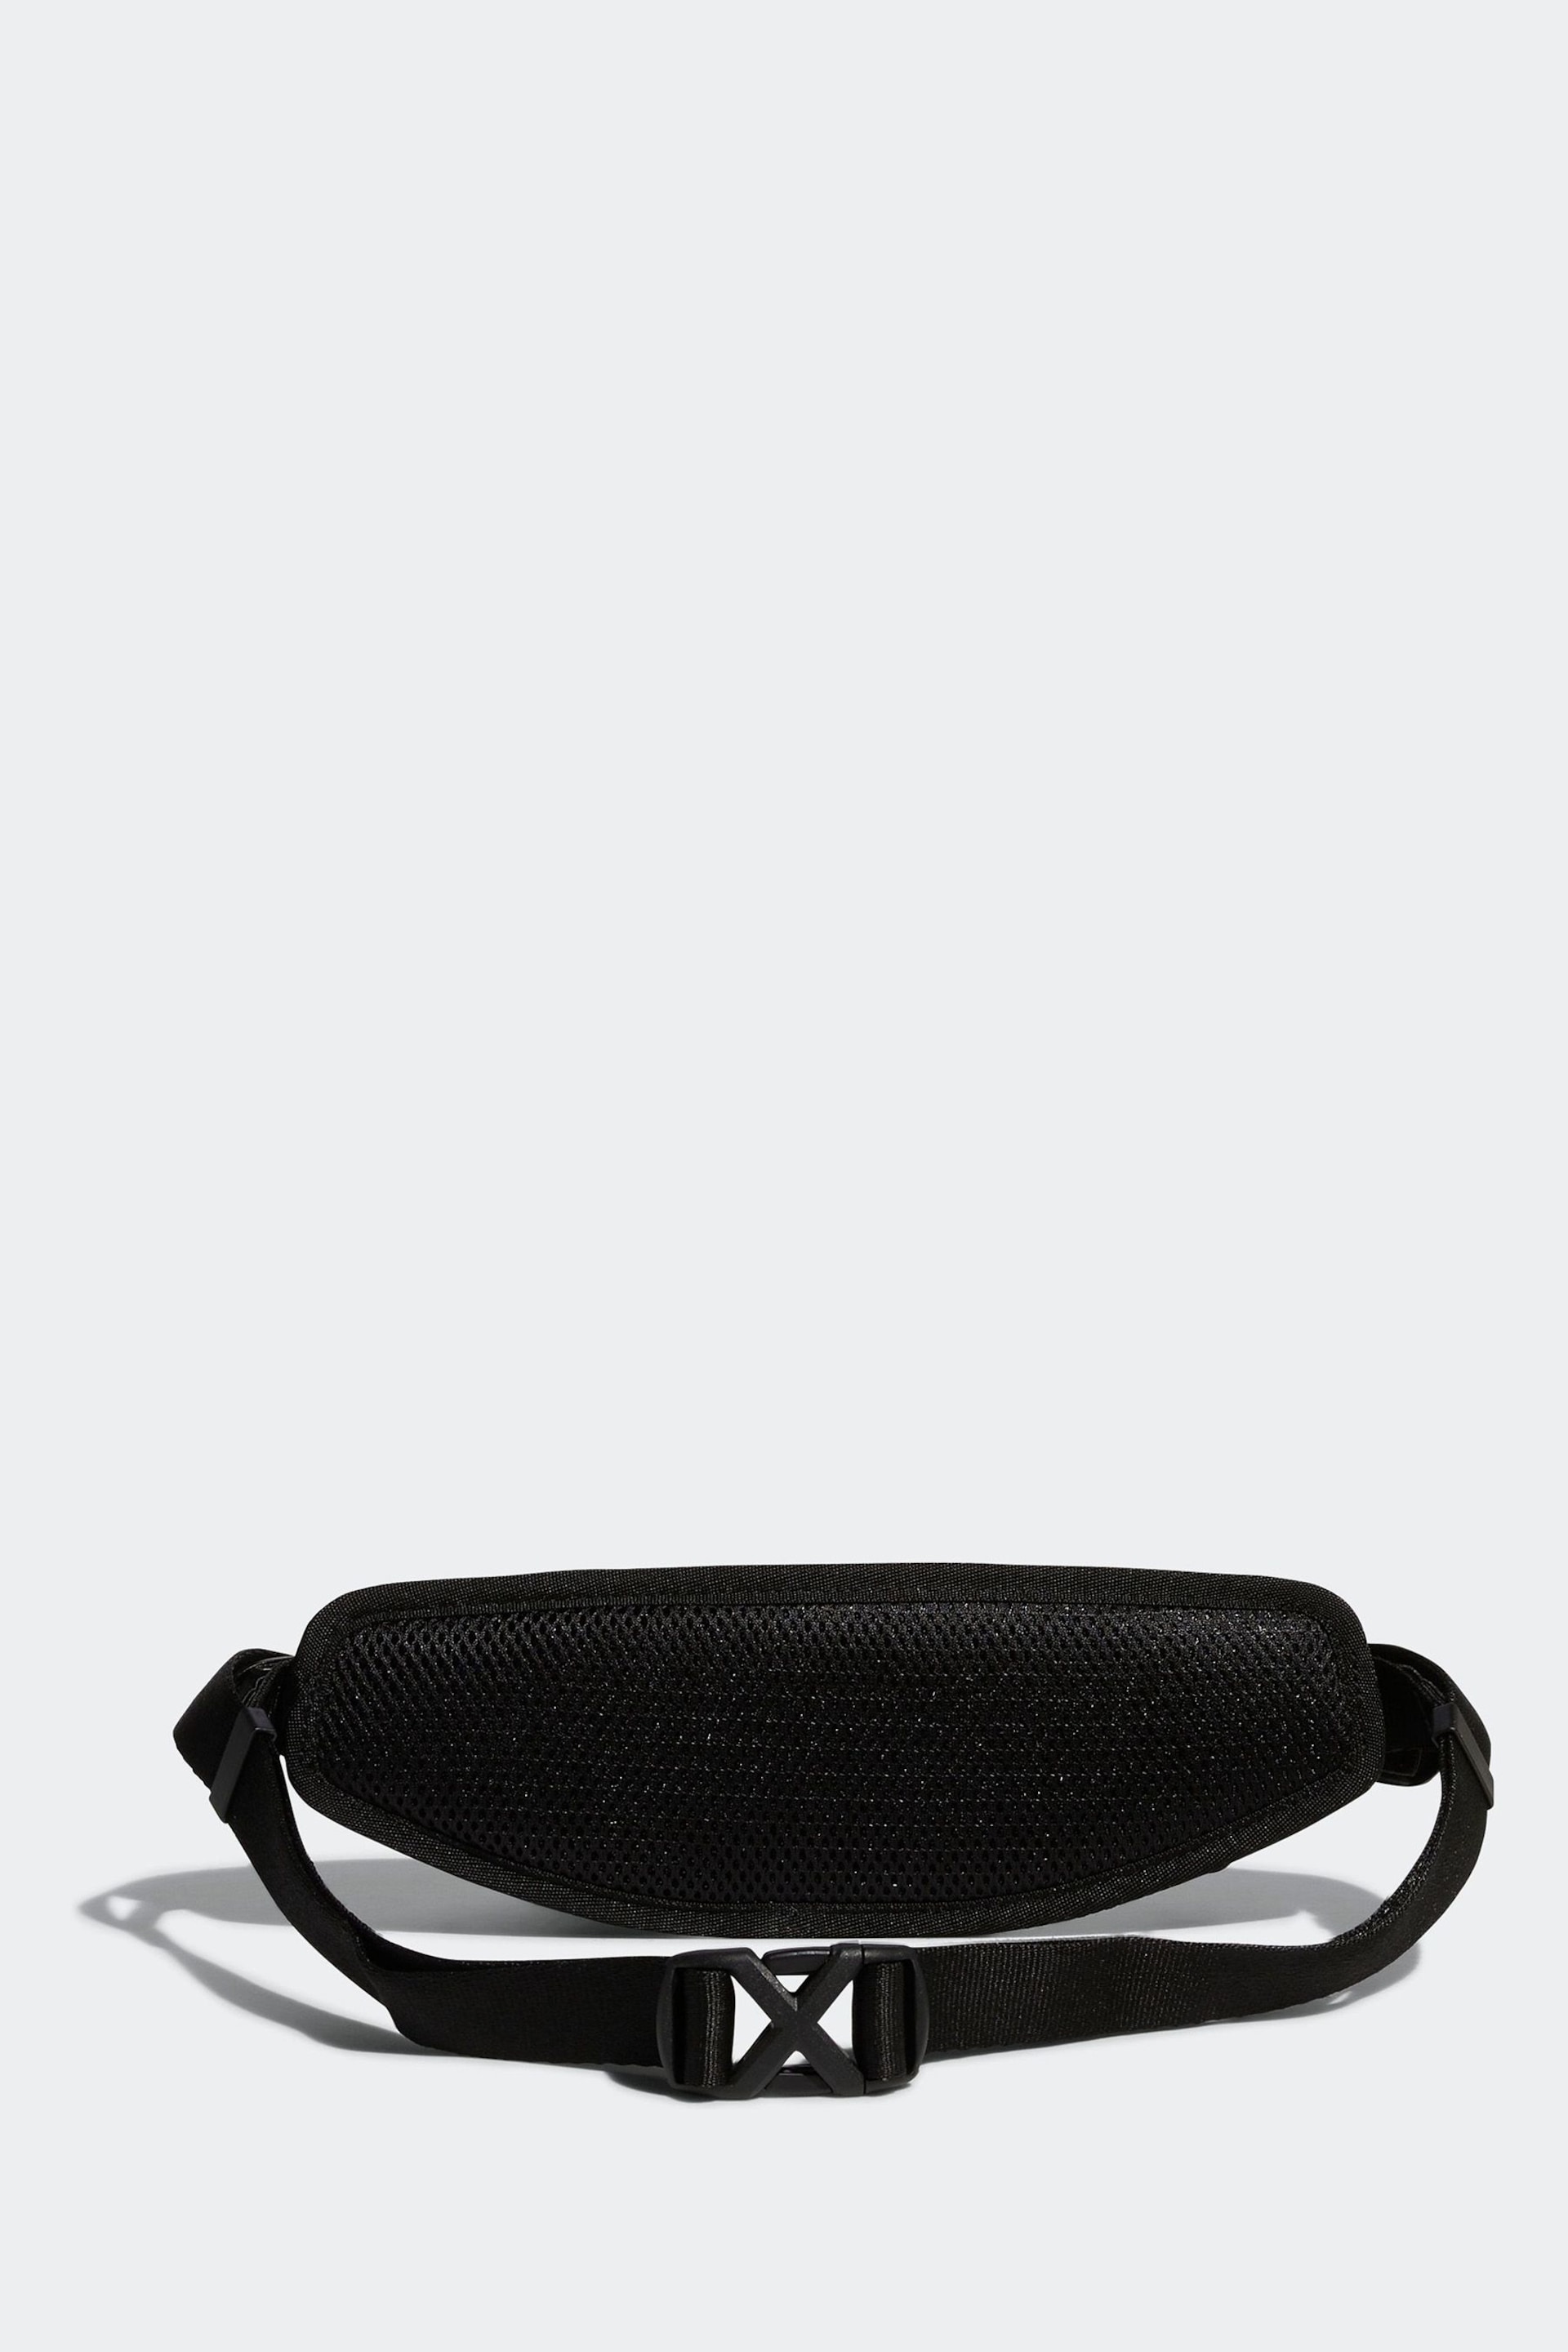 adidas Black Running Waist Bag - Image 2 of 5